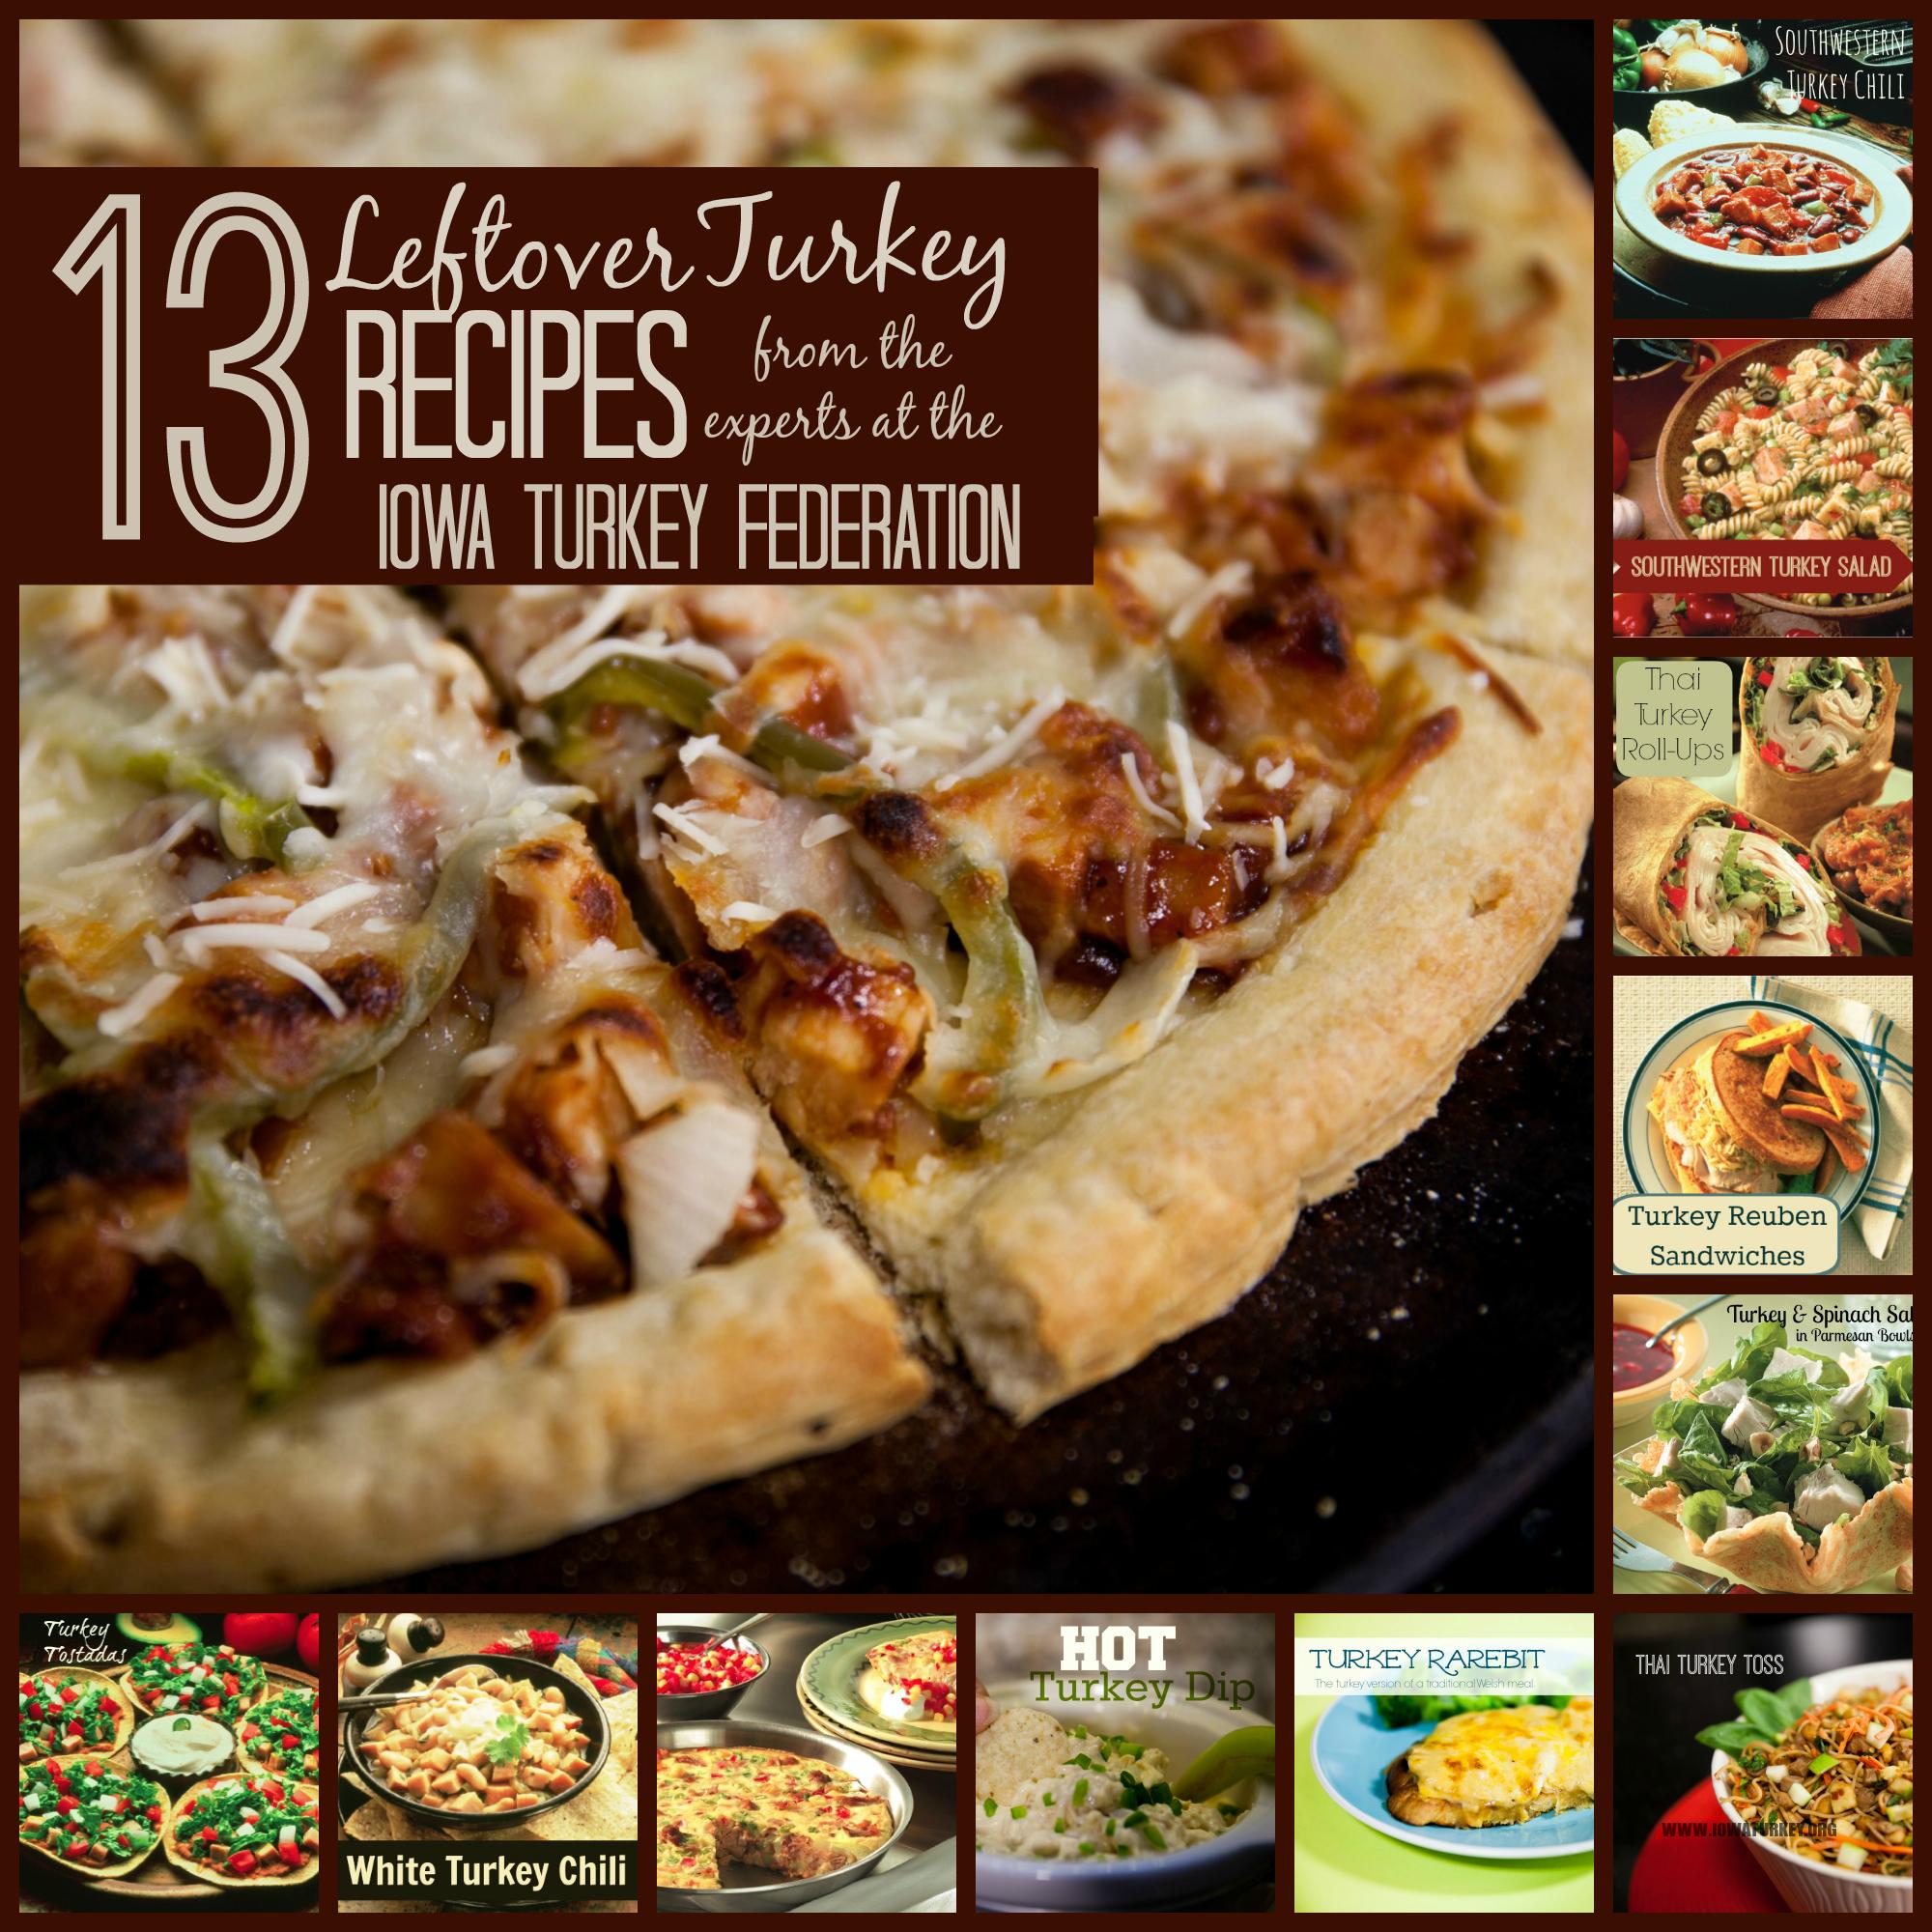 13 Leftover Thanksgiving Turkey Recipes - Iowa Turkey Federation